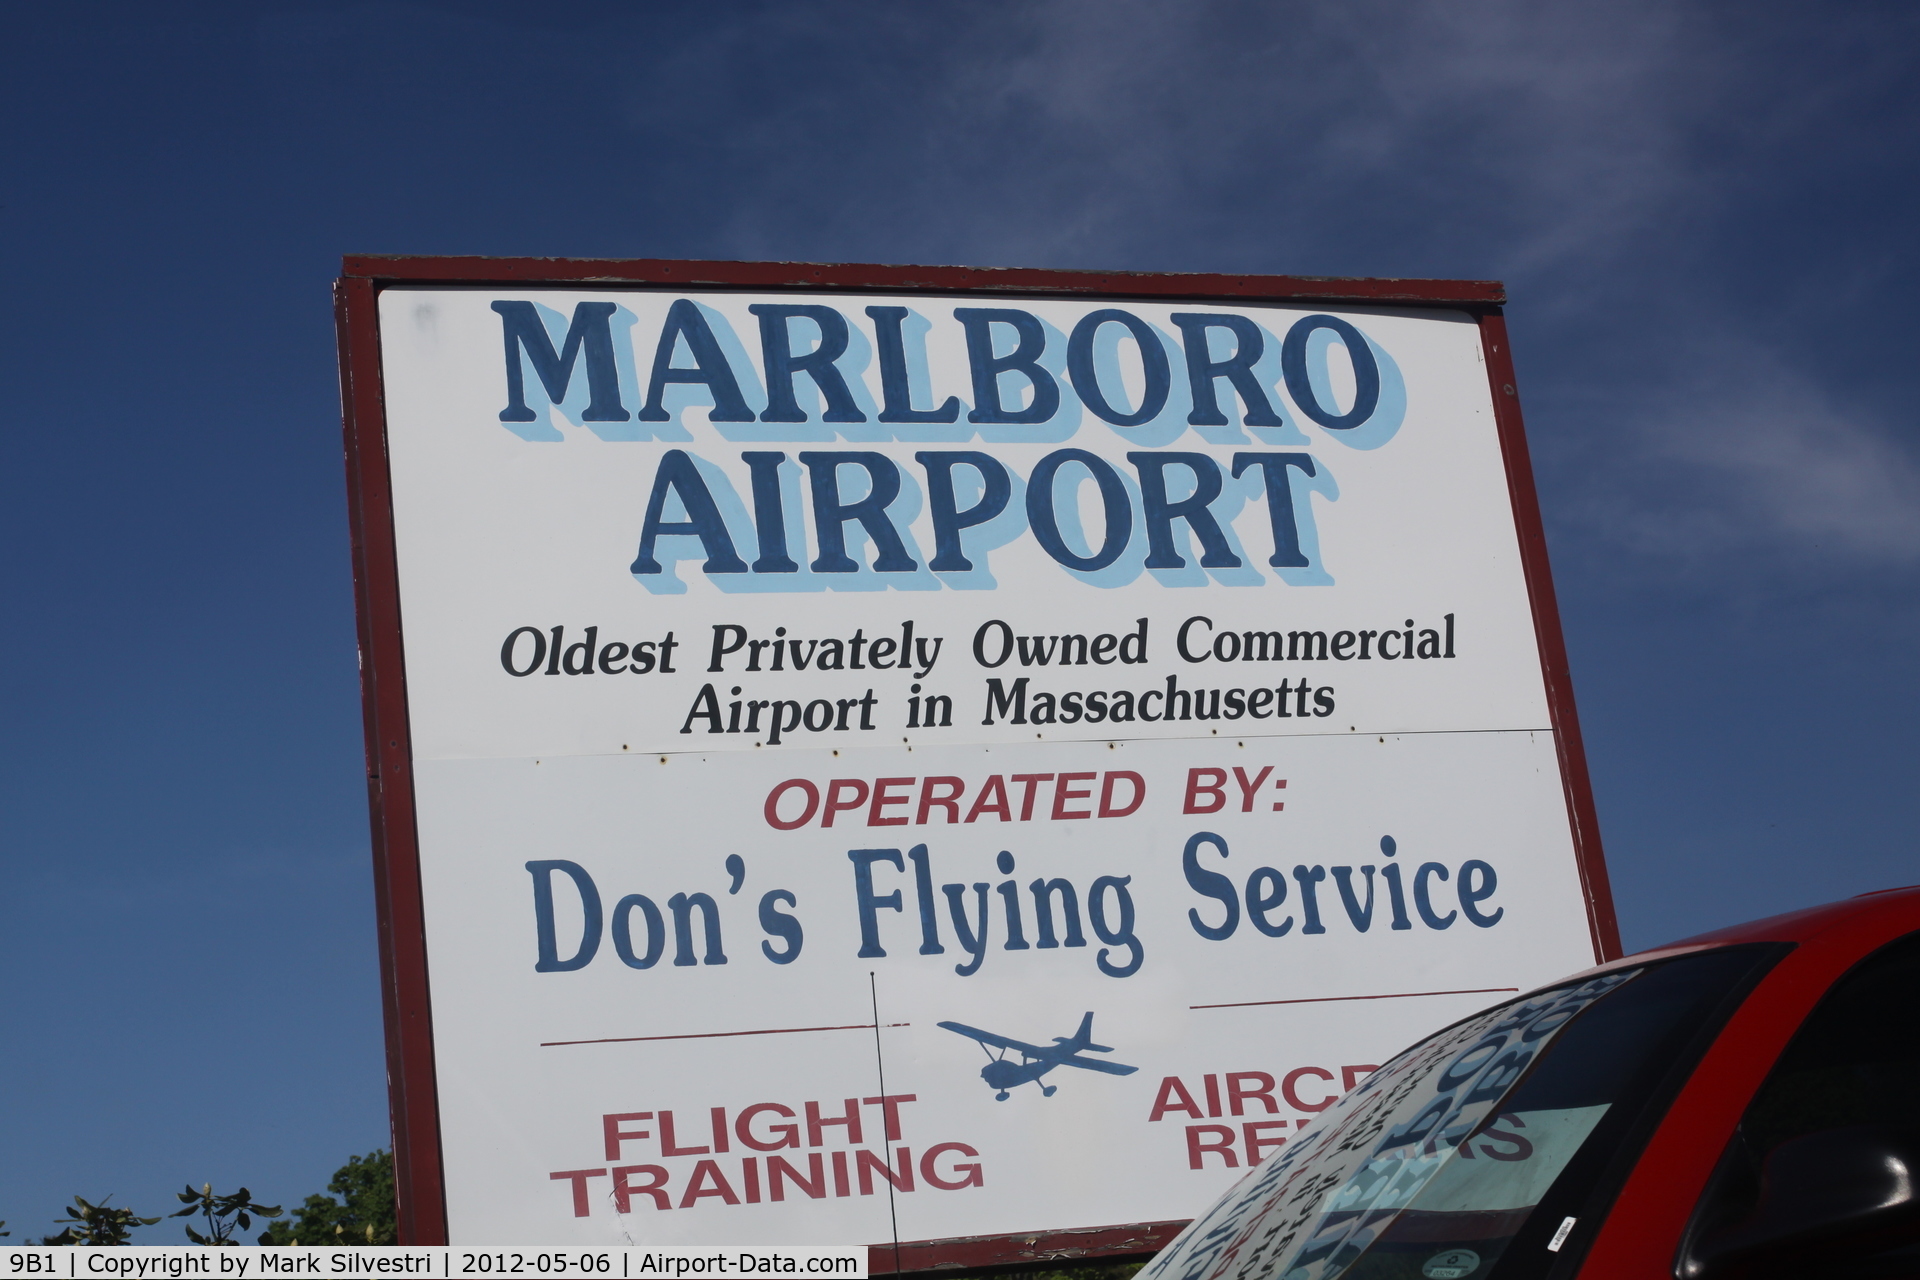 Marlboro Airport (9B1) - Entrance to Marlboro Airport